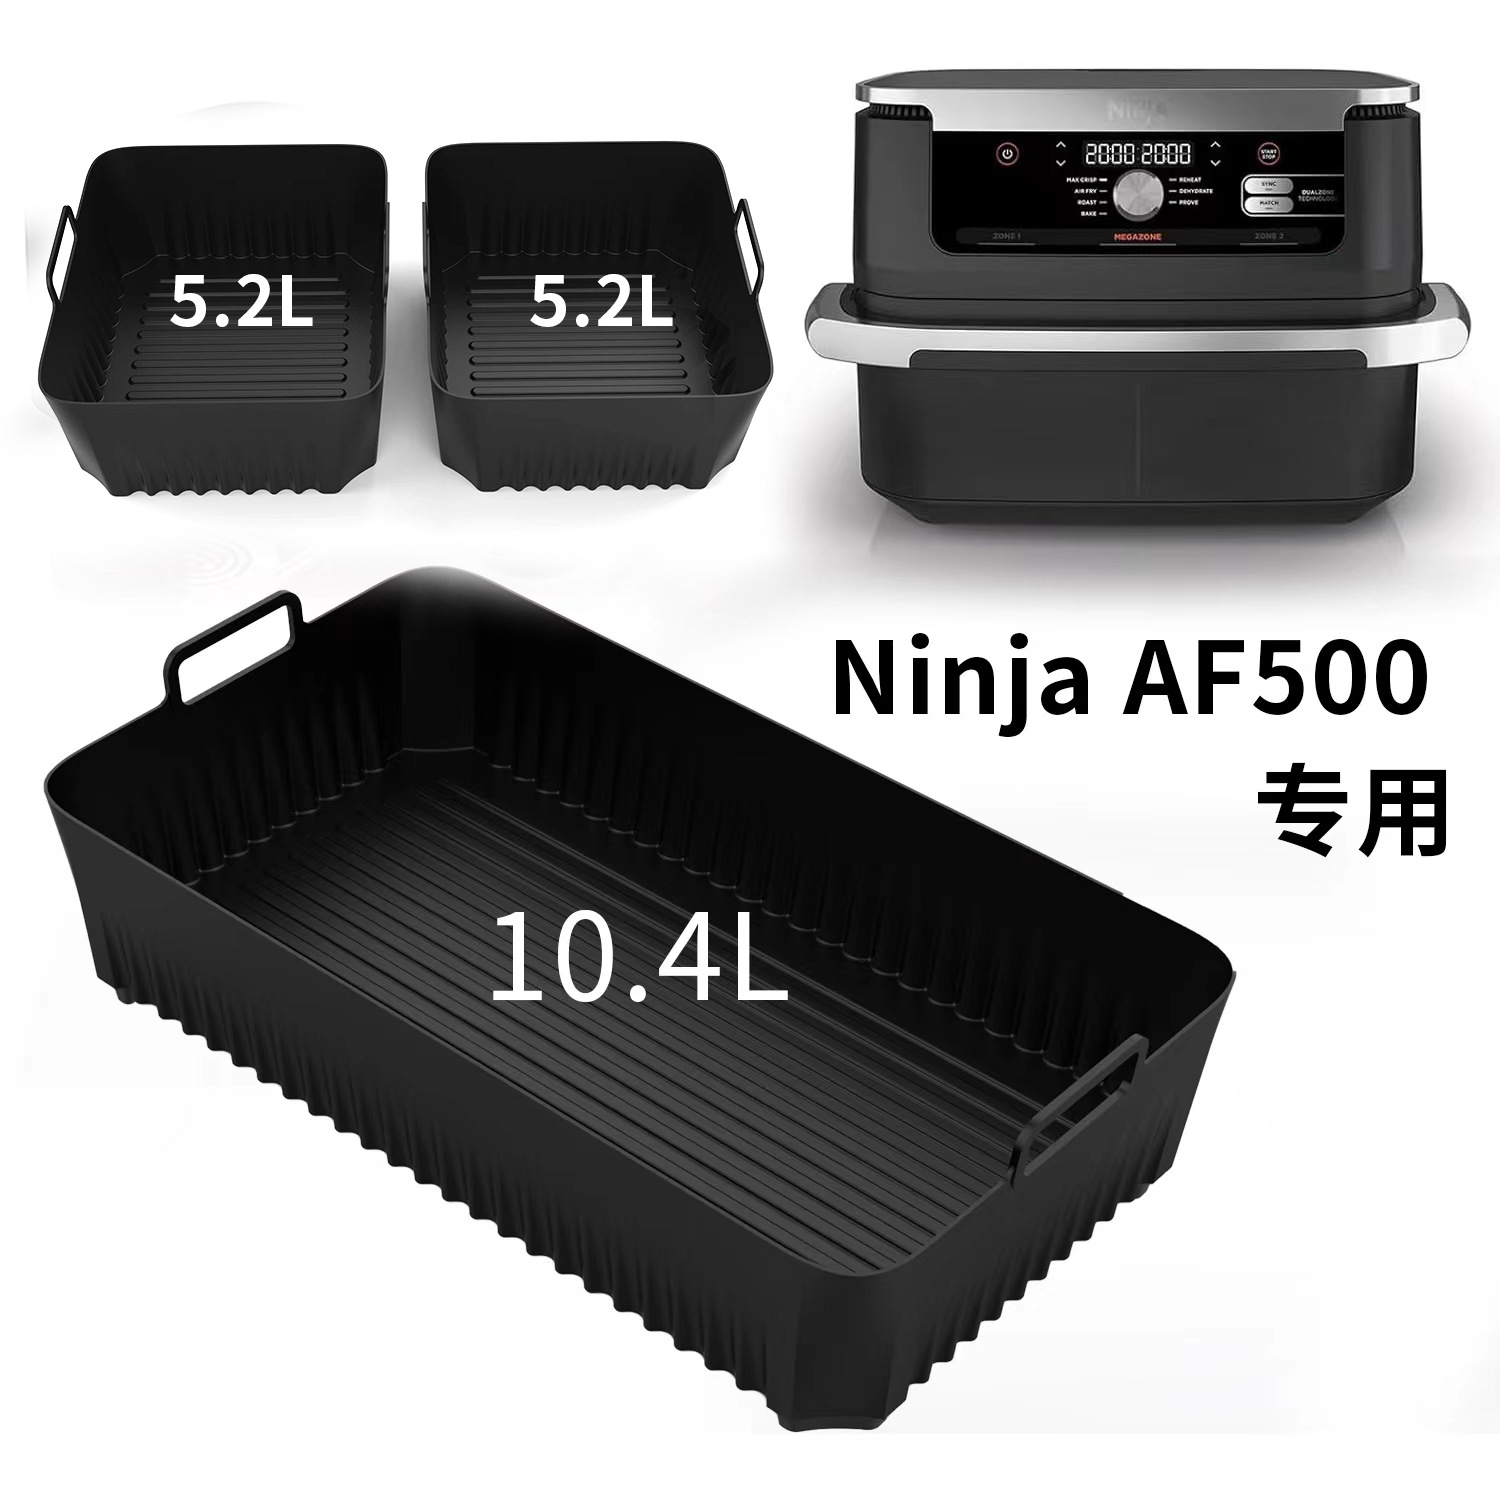 新品亚马逊空气炸锅硅胶烤盘适用Ninja AF500 Air fryer silicone